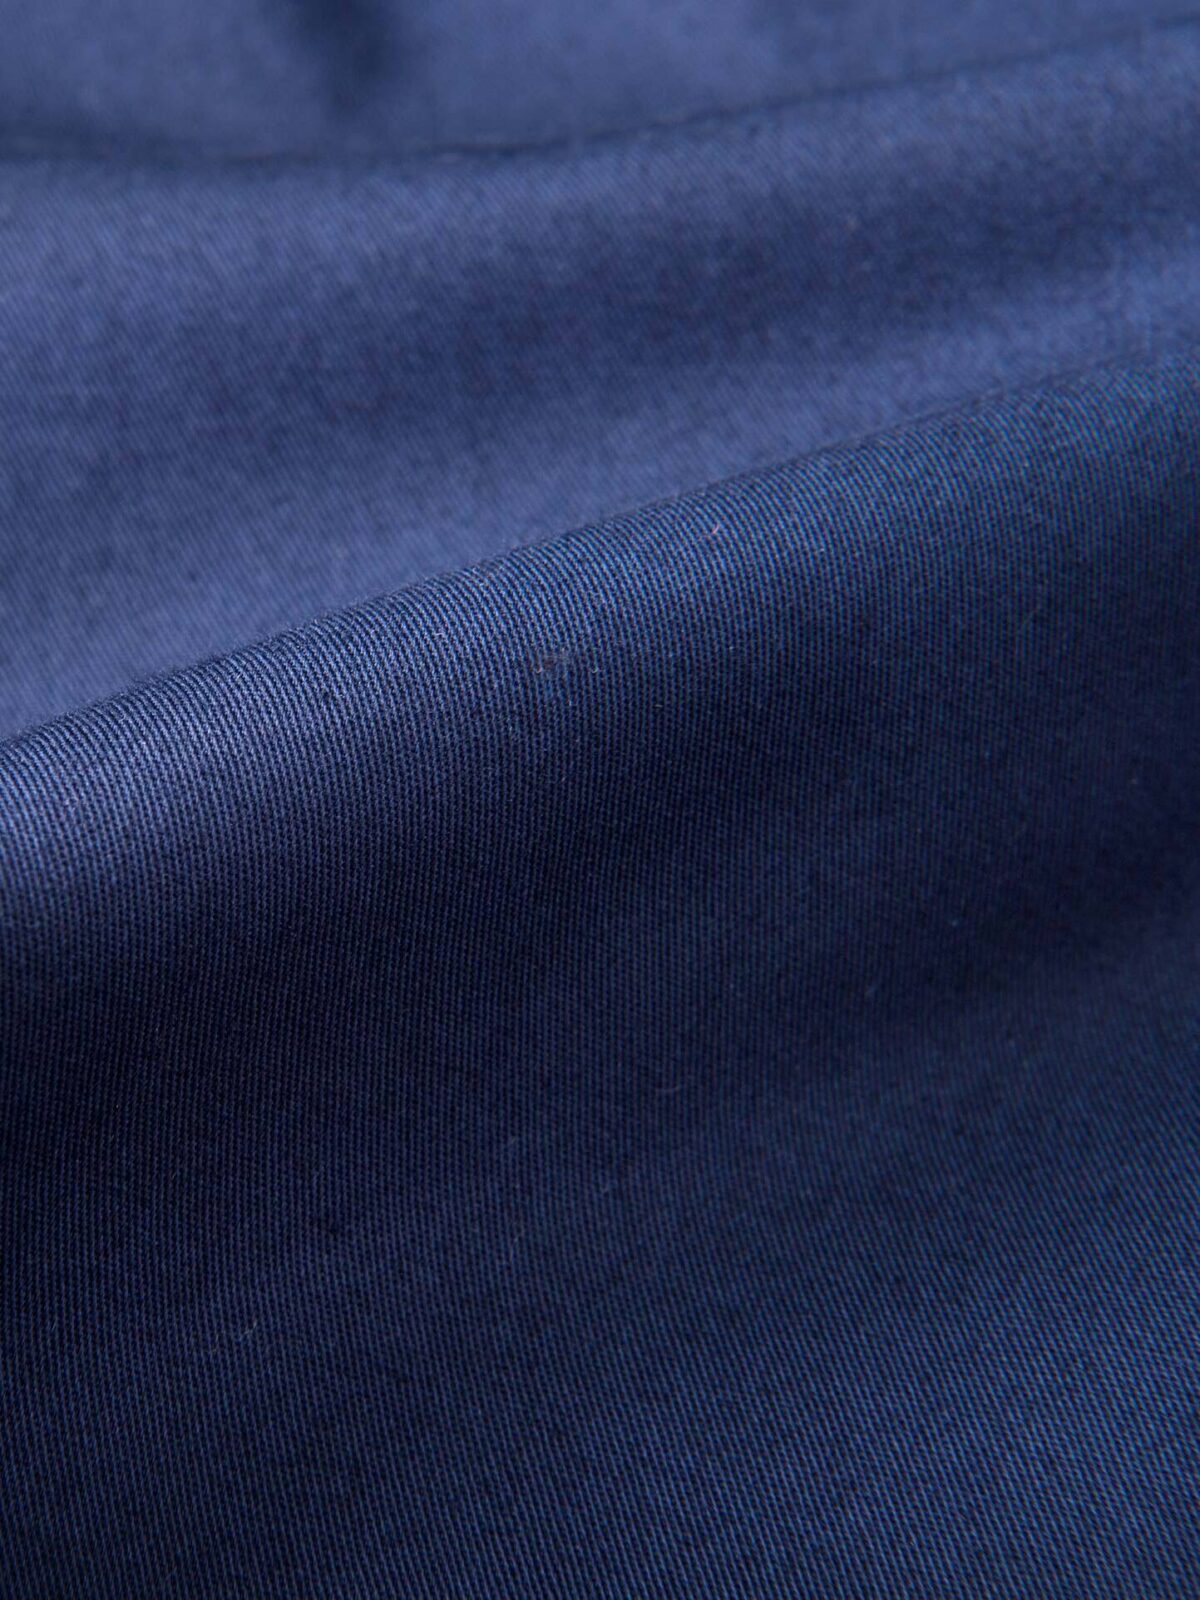 Cotton Dress Material ( Unstitched Salwar Suits) -BBQSTYLE – Blueberry  Boutique